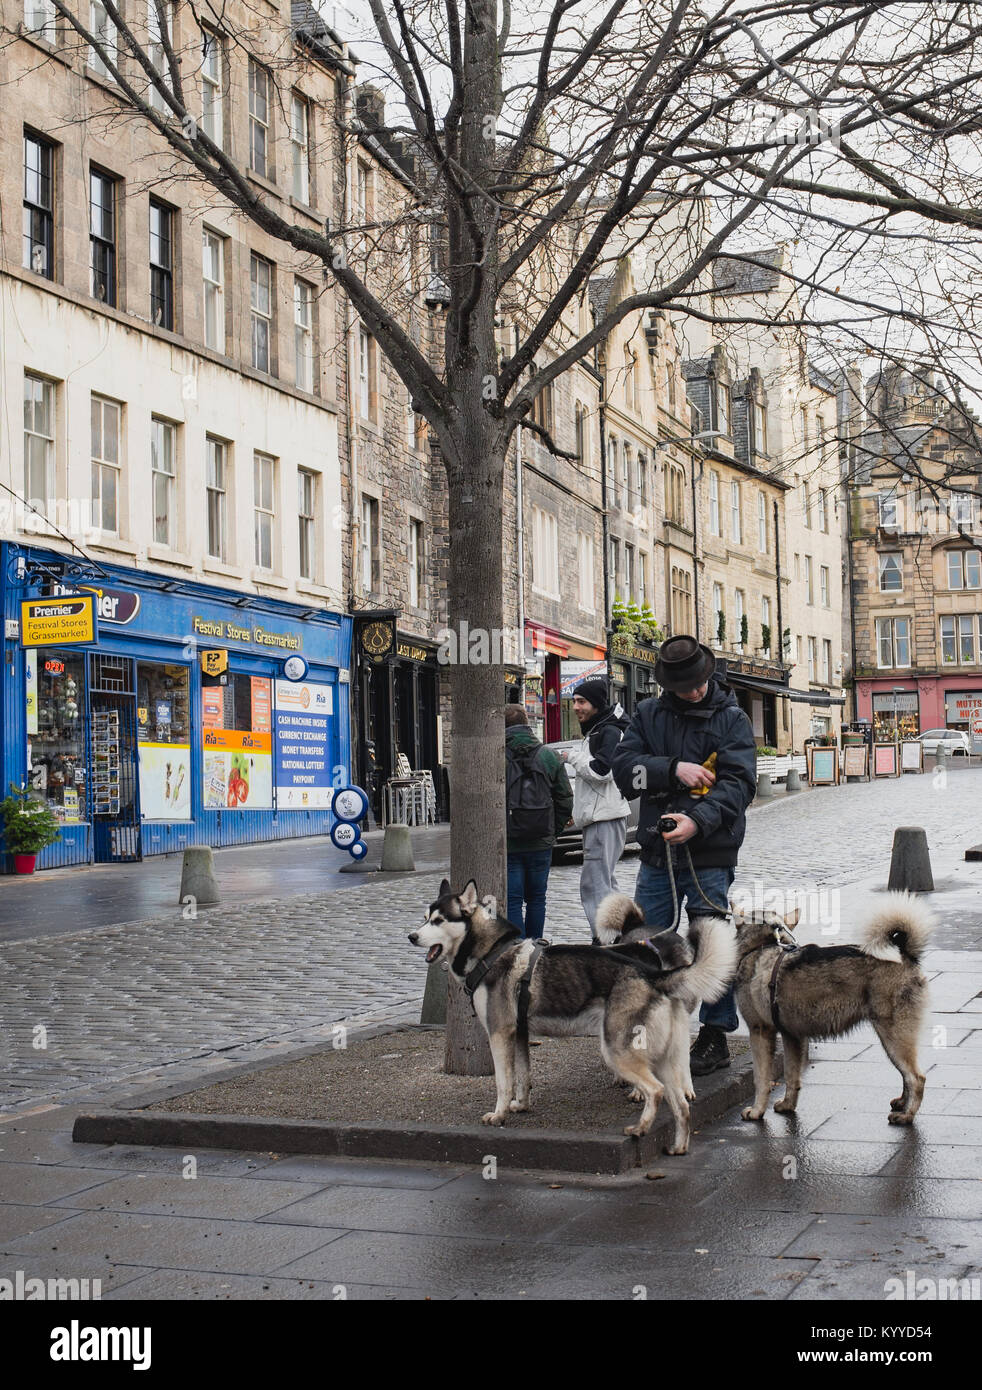 Man looking like Heisenberg or Walter White, walking dogs on street in Edinburgh Stock Photo